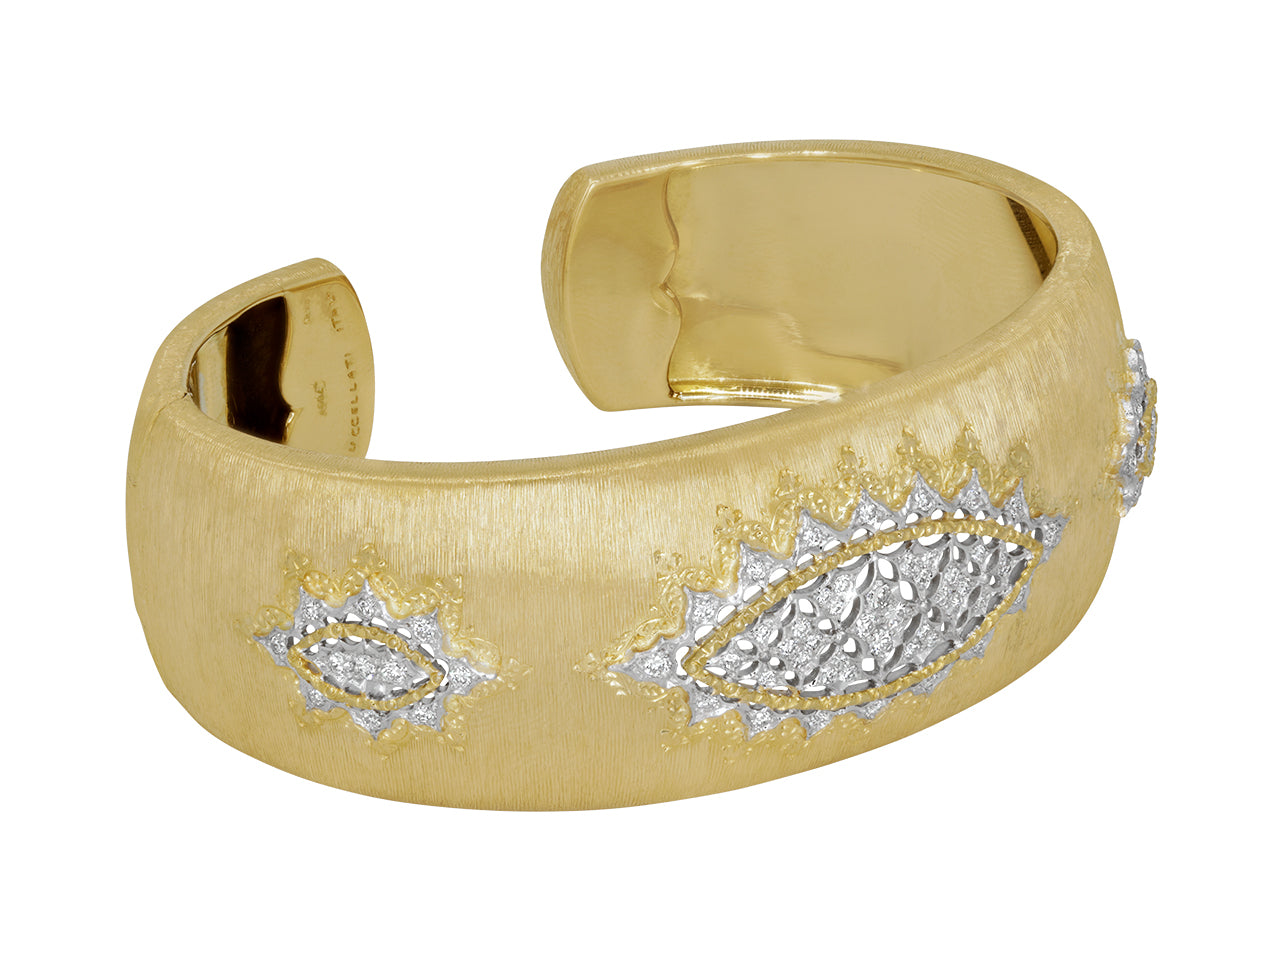 Buccellati Diamond Bracelet in 18K Gold